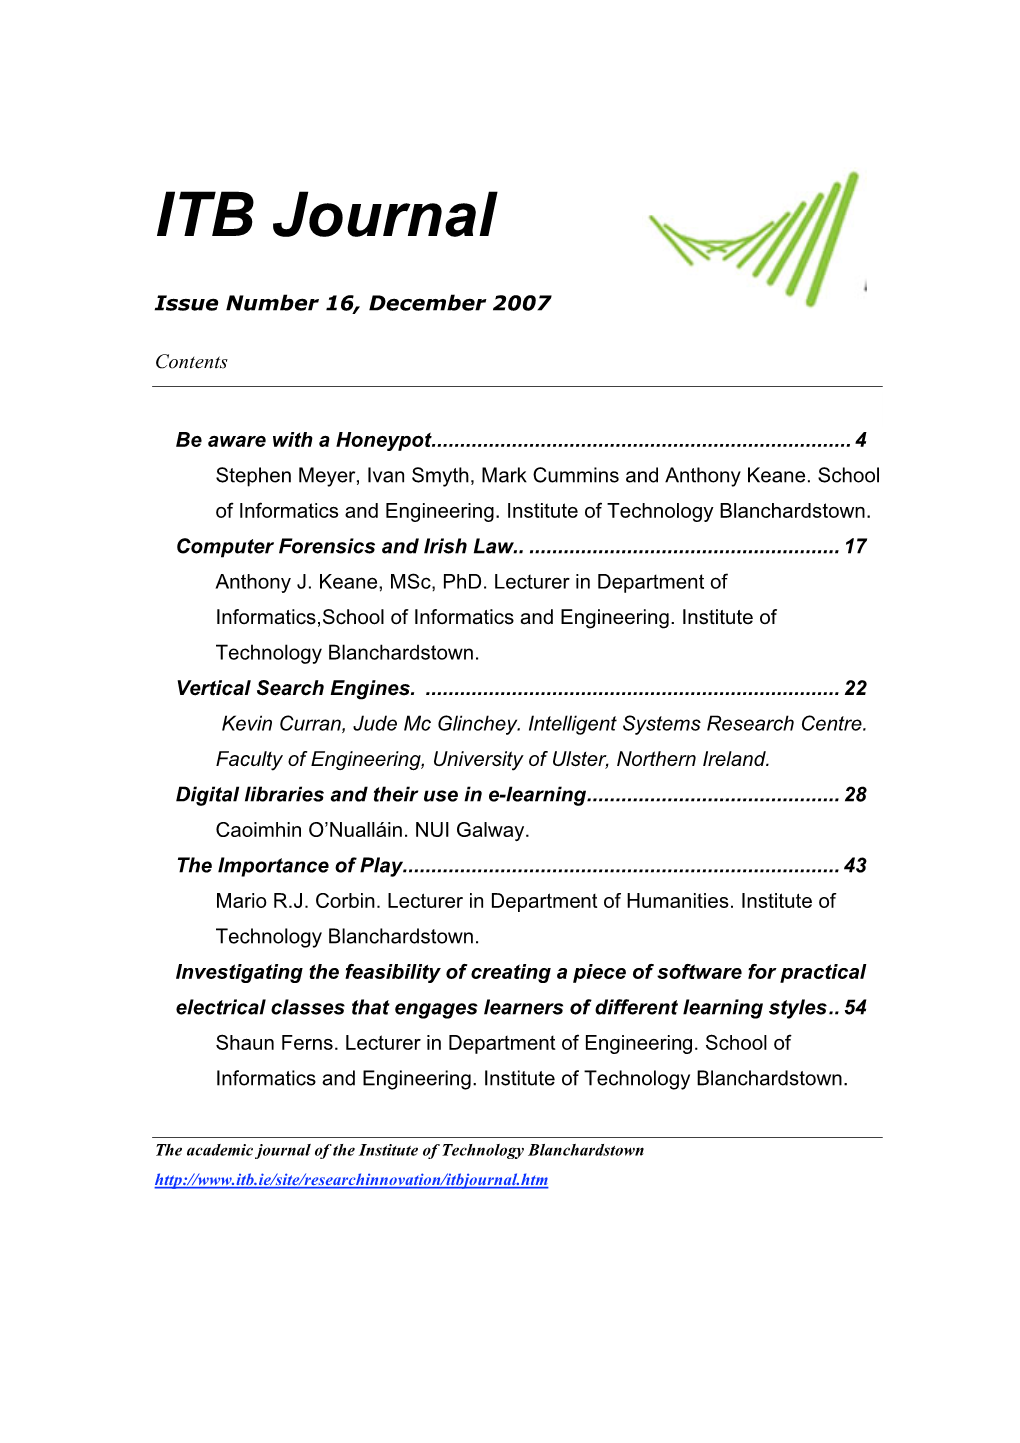 ITB Journal-December-2007